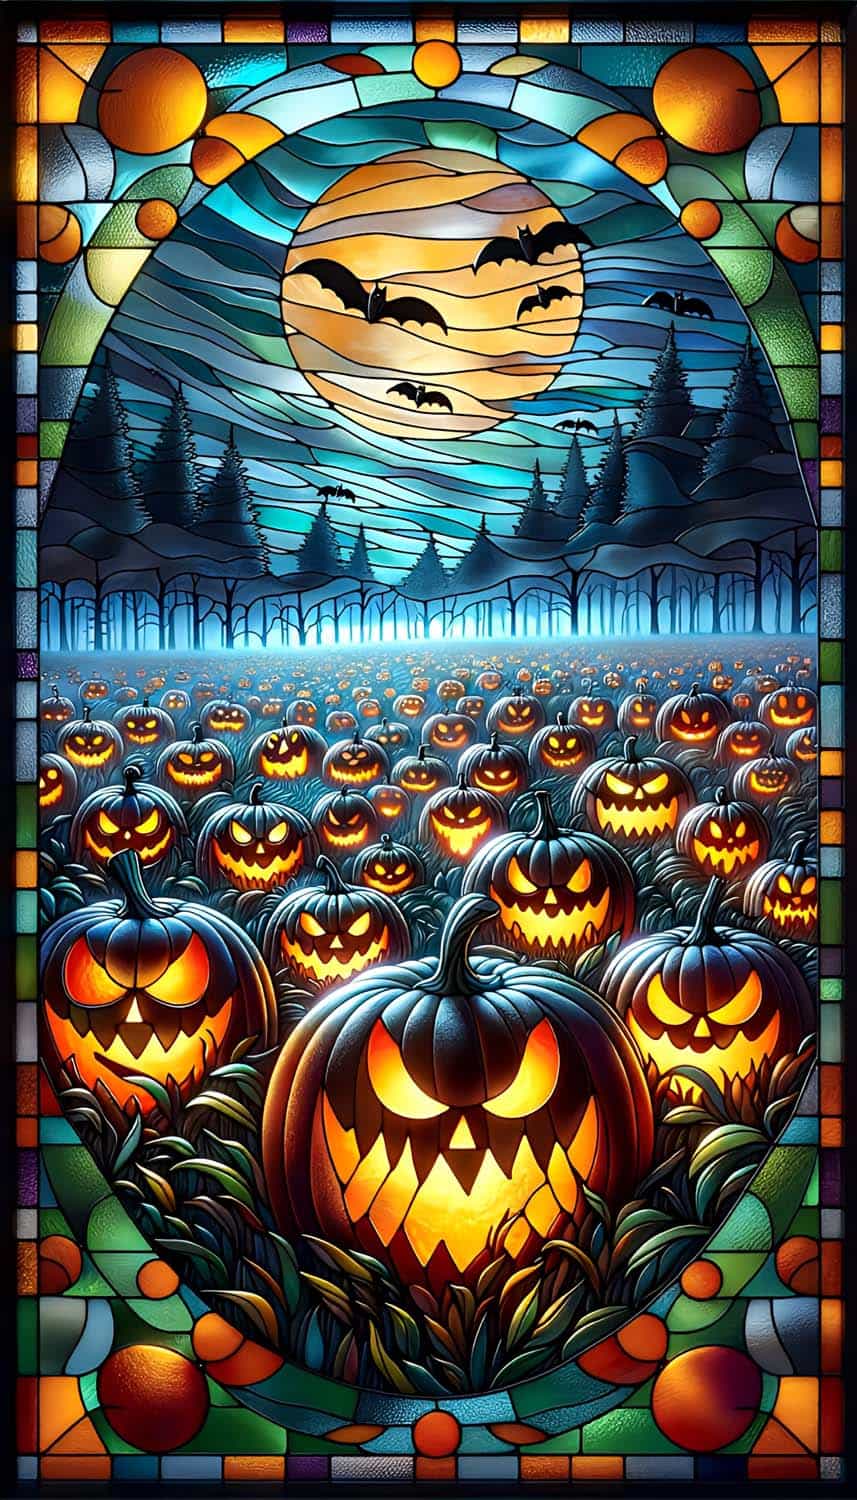 Halloween Pumpkins iPhone Wallpaper 4K